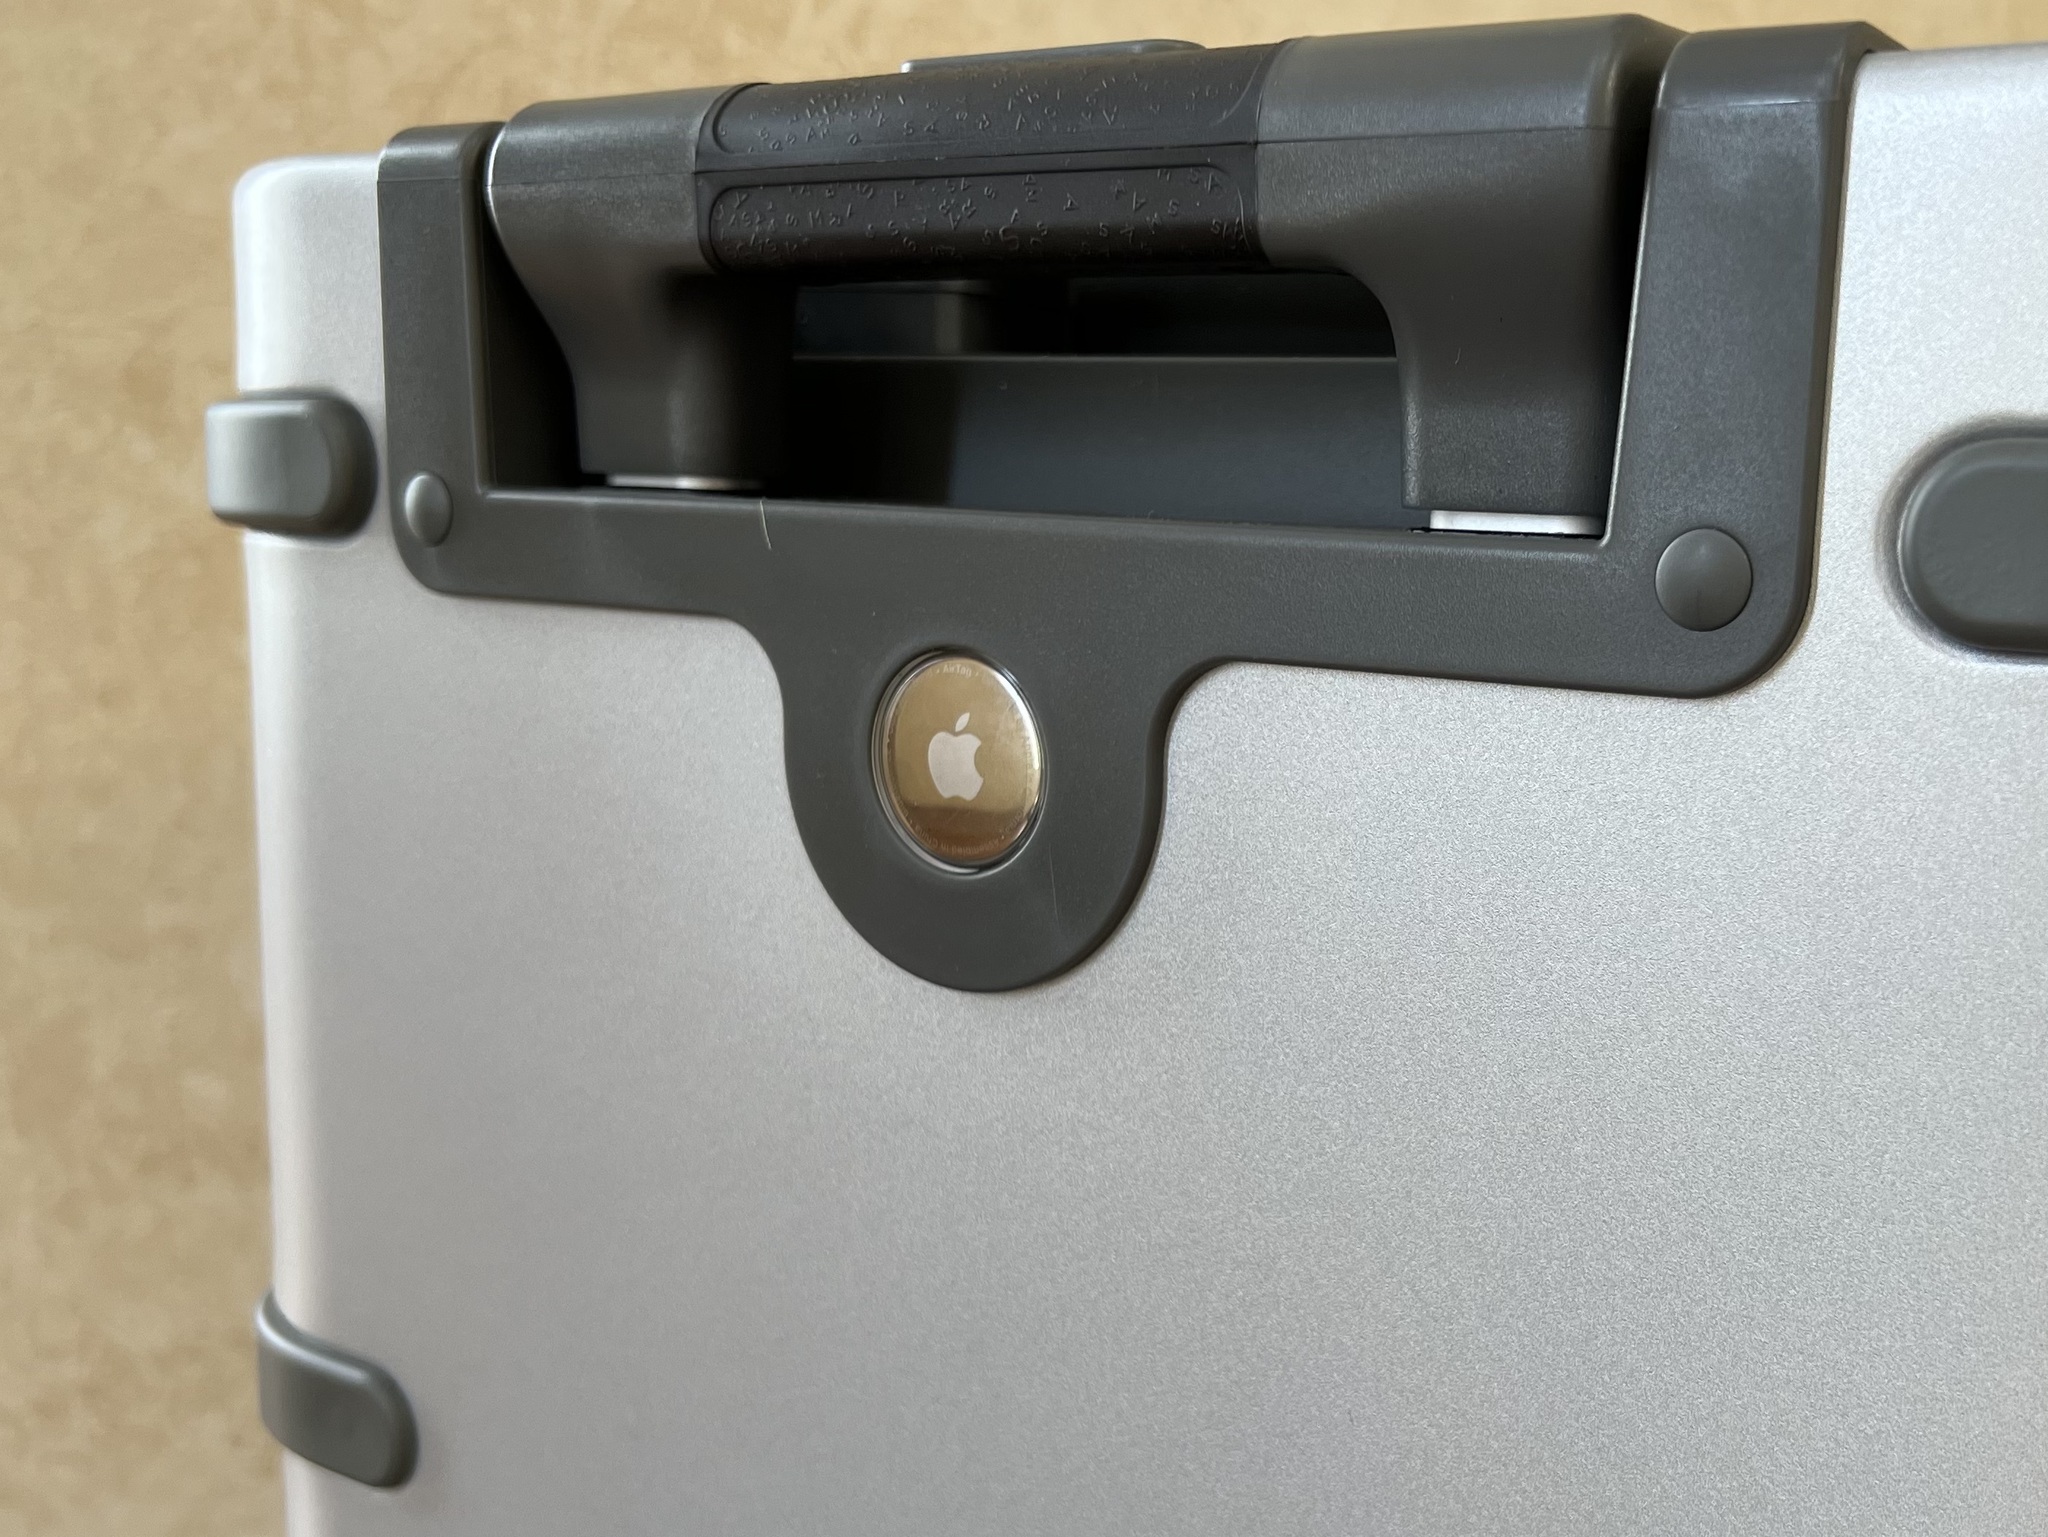 Apple Foldable Travel Bag | eBay